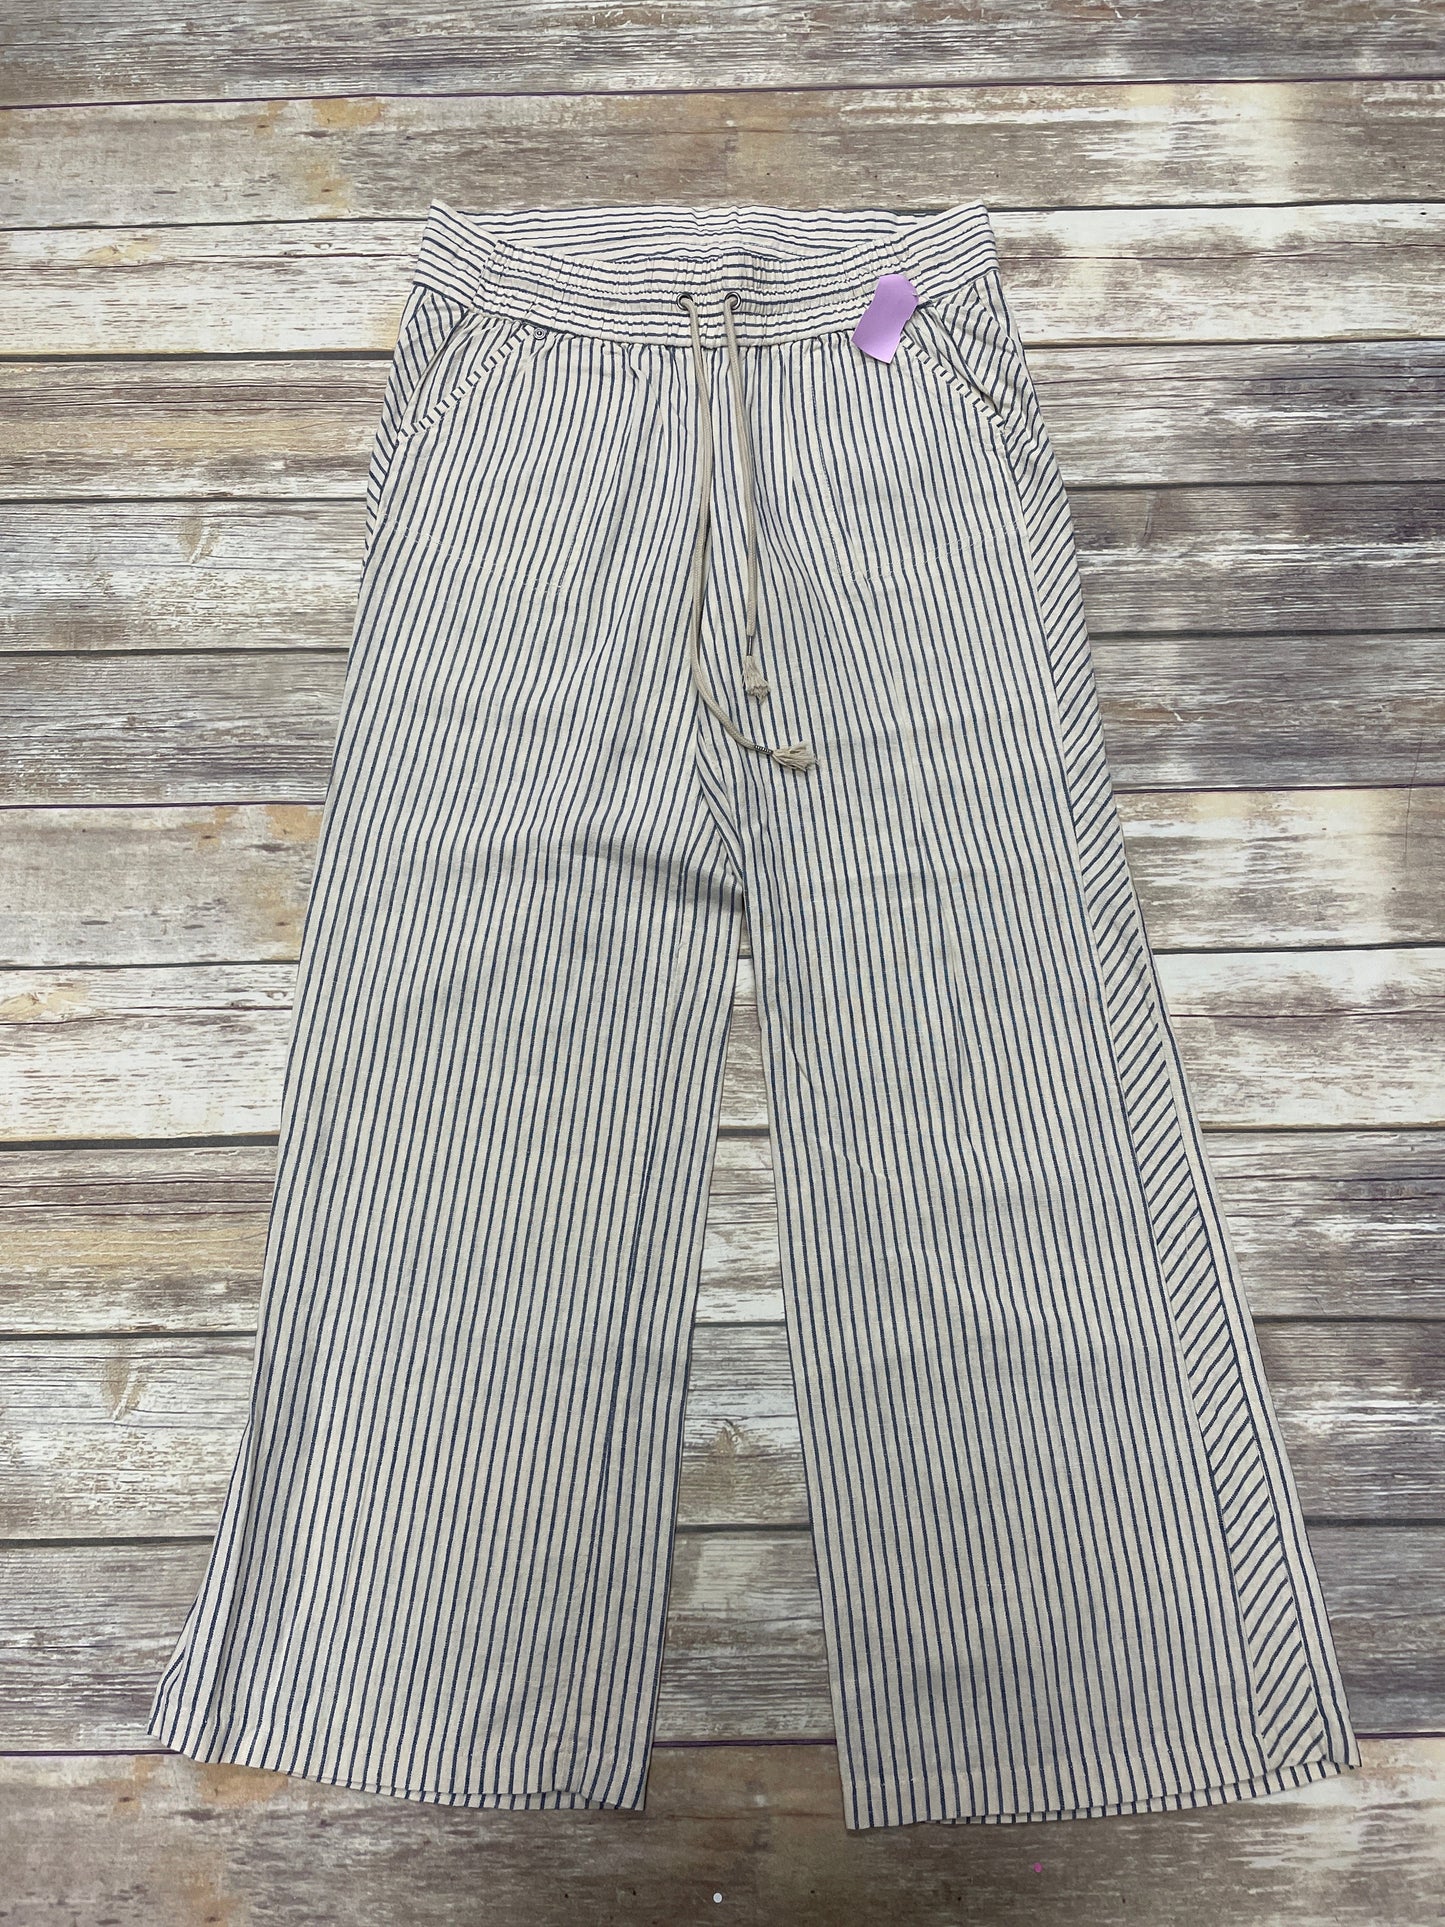 Striped Pattern Pants Lounge Jolt, Size 8